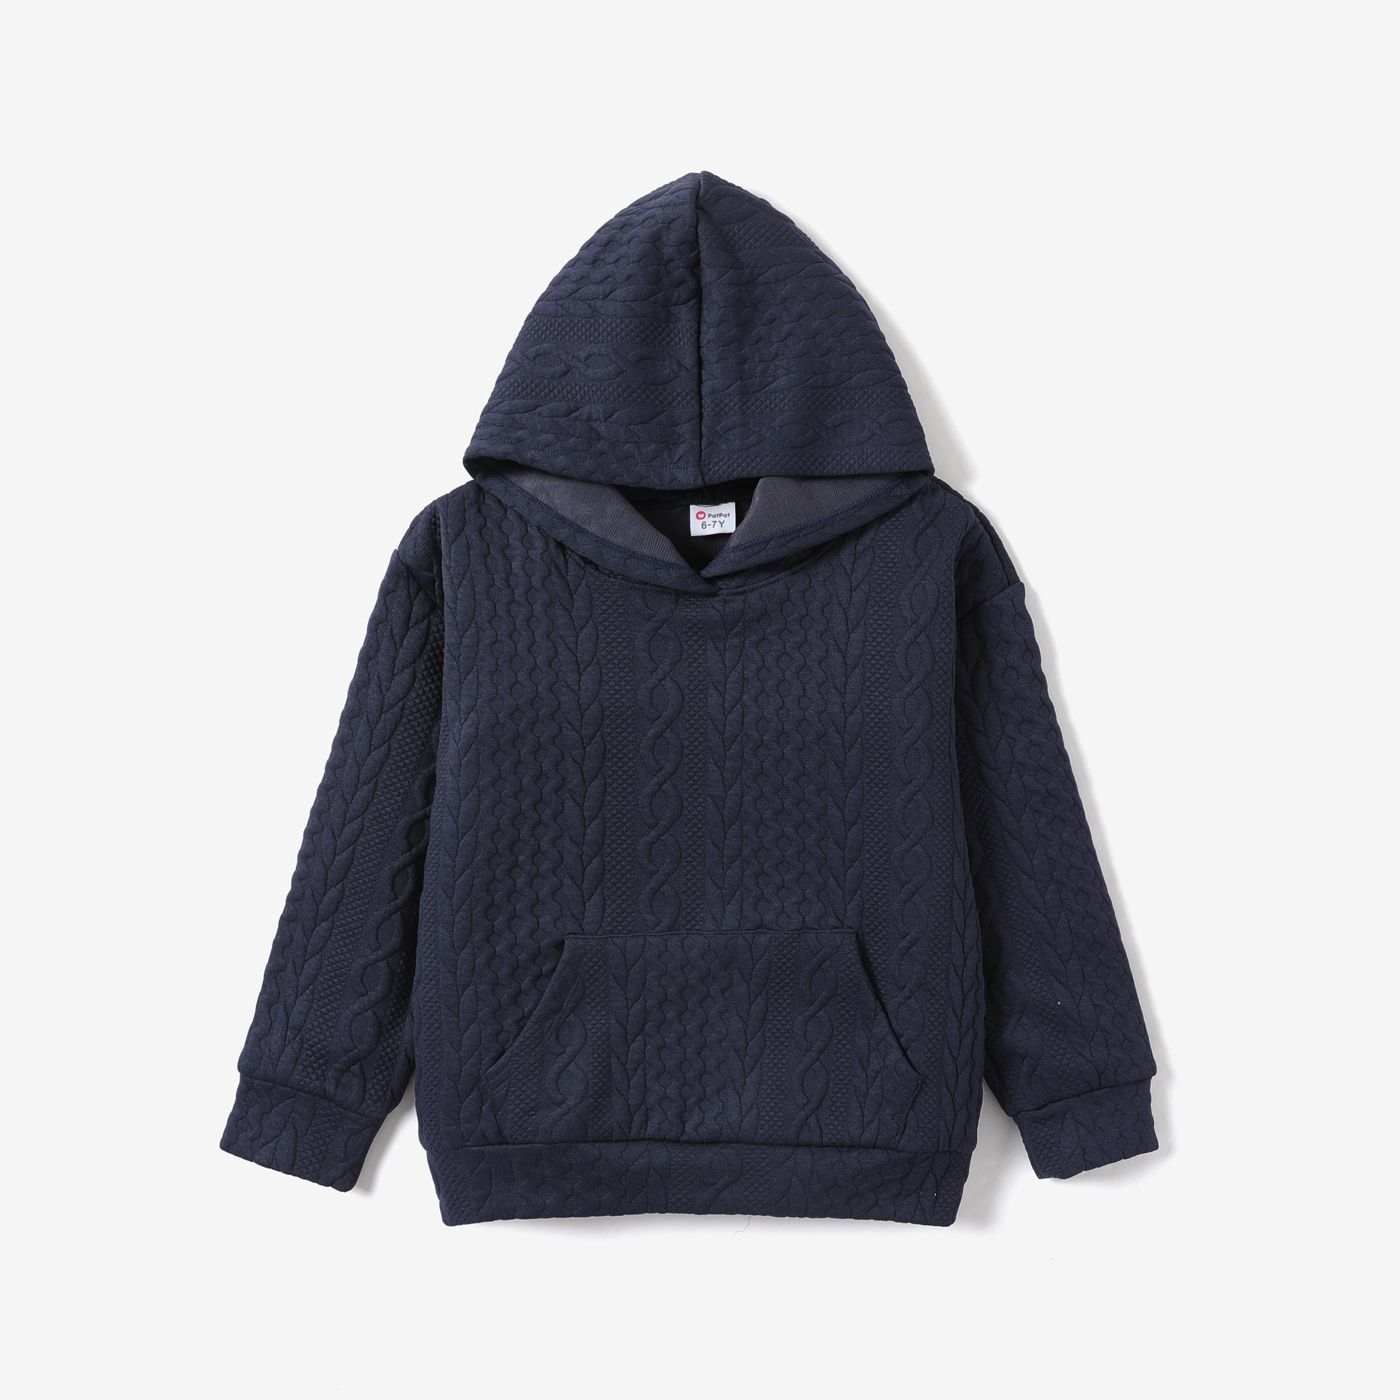 Kid Boy Hooded Casual Solid Color Sweatshirt/Top